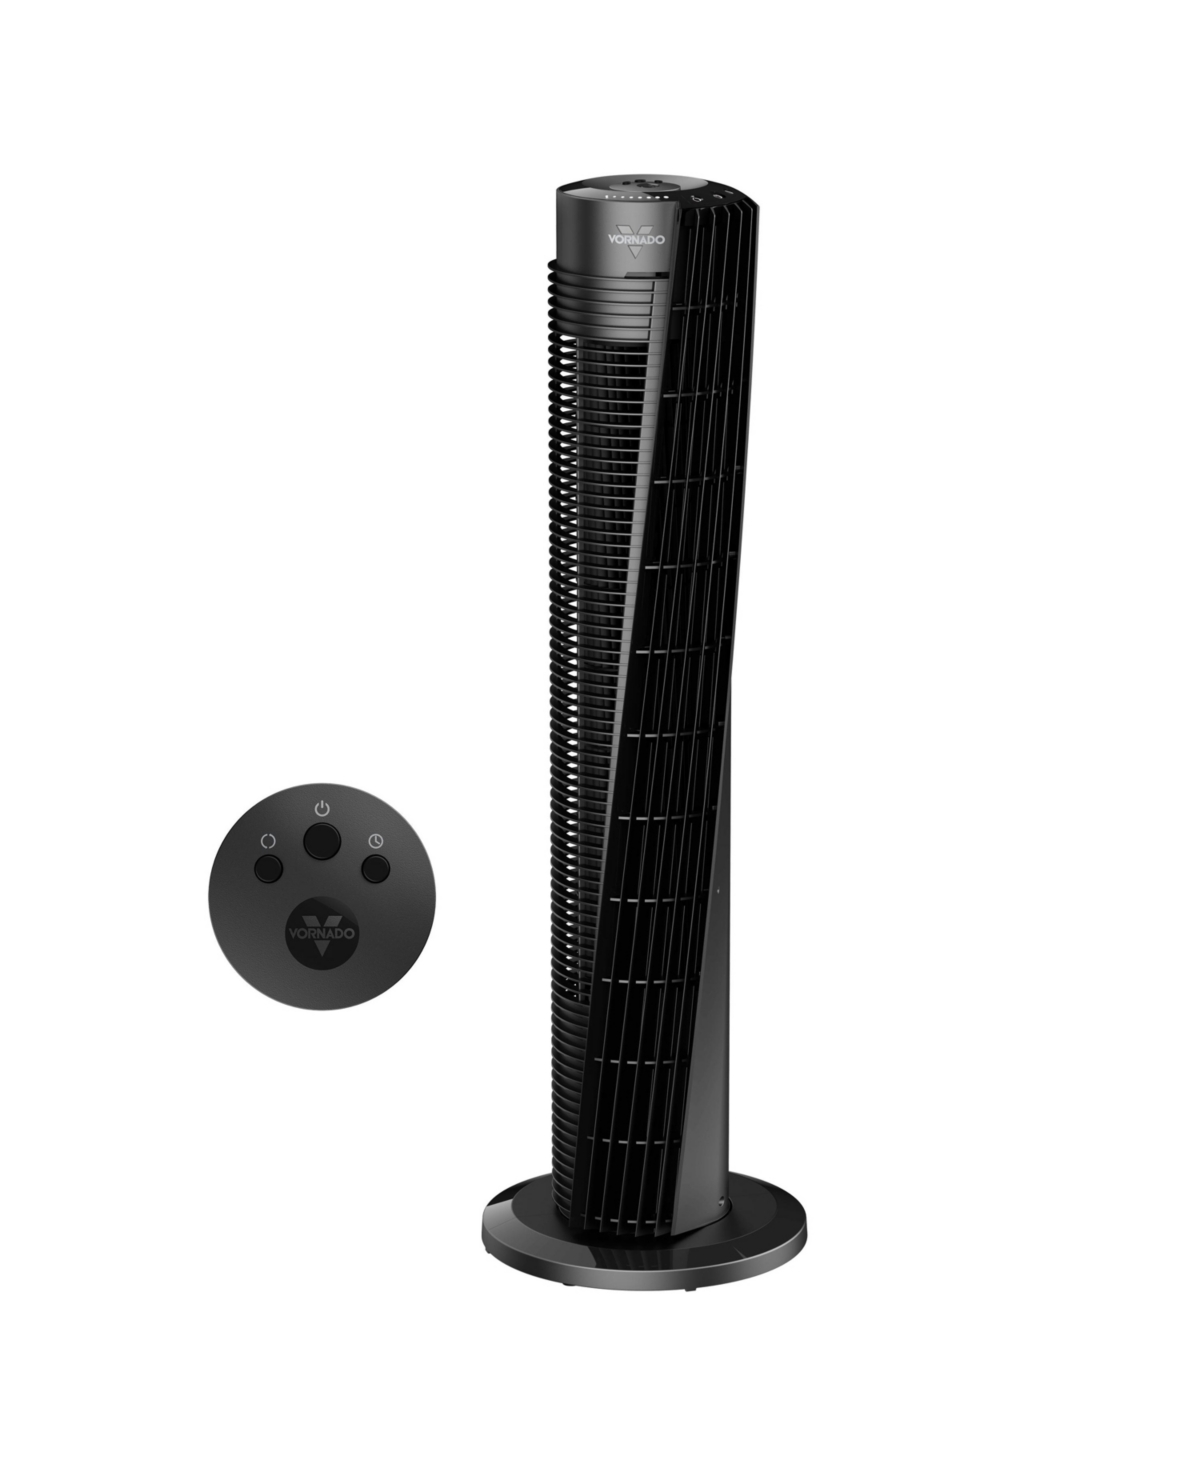 Vornado Osc84 41" Whole Room Air Circulator Tower Fan With Remote Control, Black